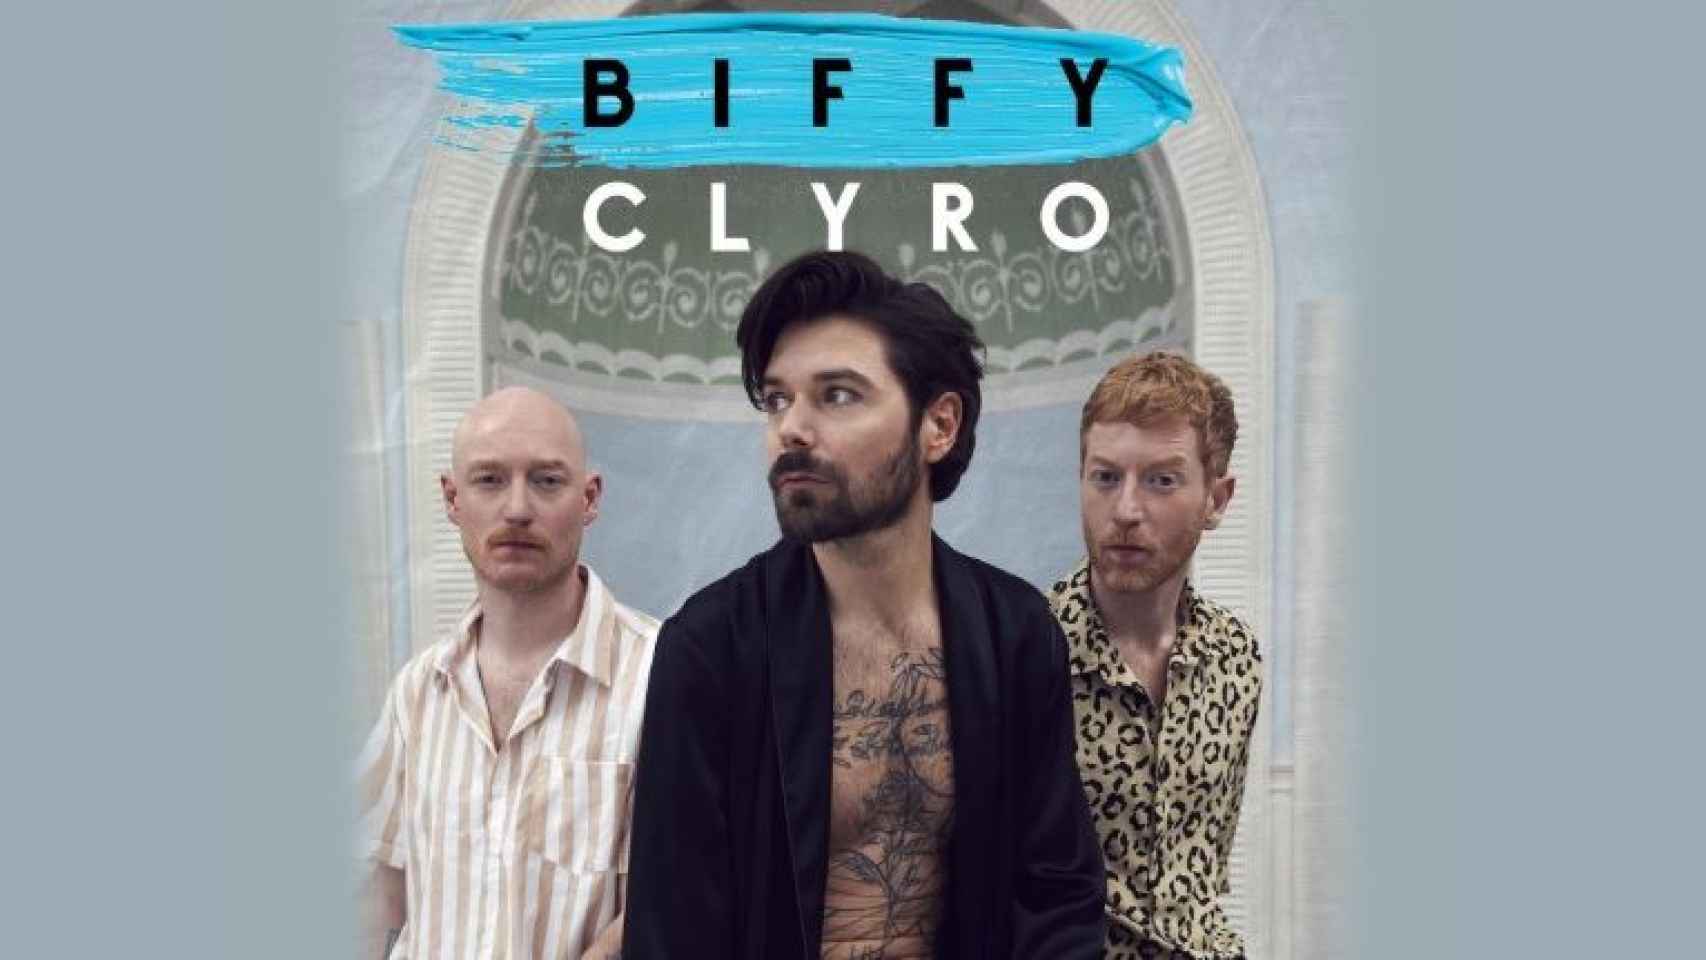 El grupo Biffy Clyro / BIFFY CLYRO